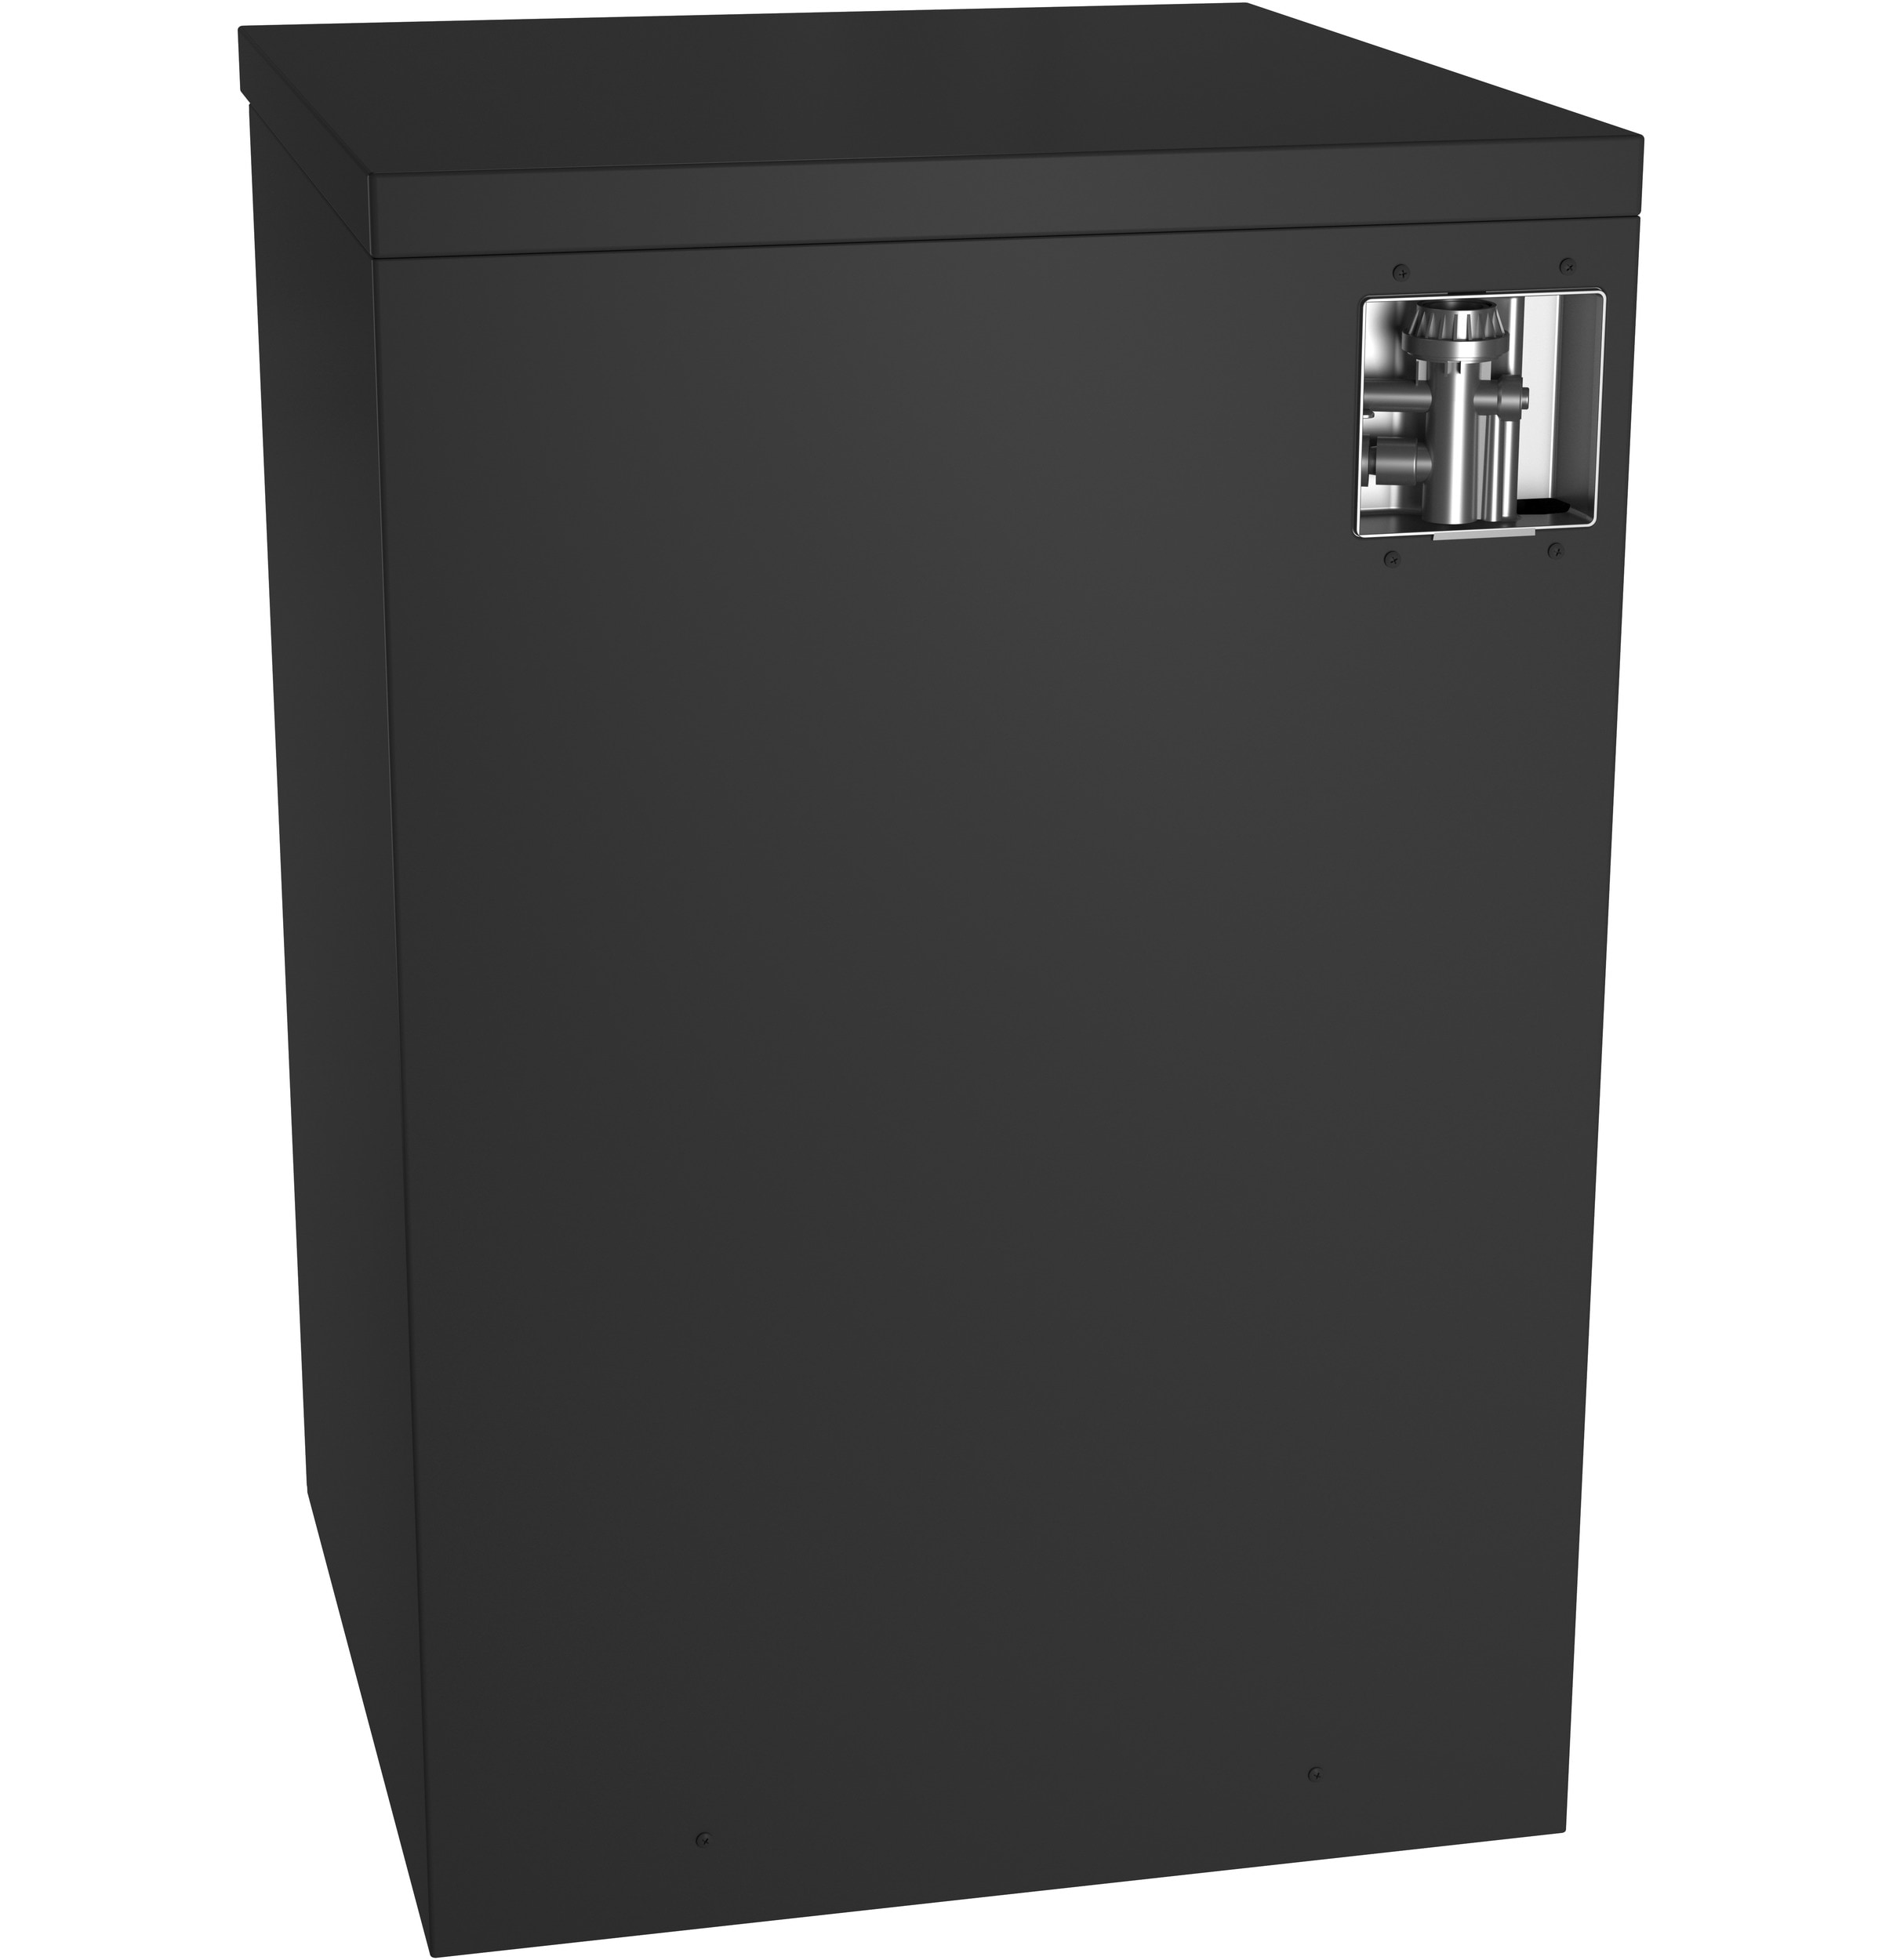 GE 23.625-in Portable Freestanding Dishwasher (Black) ENERGY STAR, 54-dBA